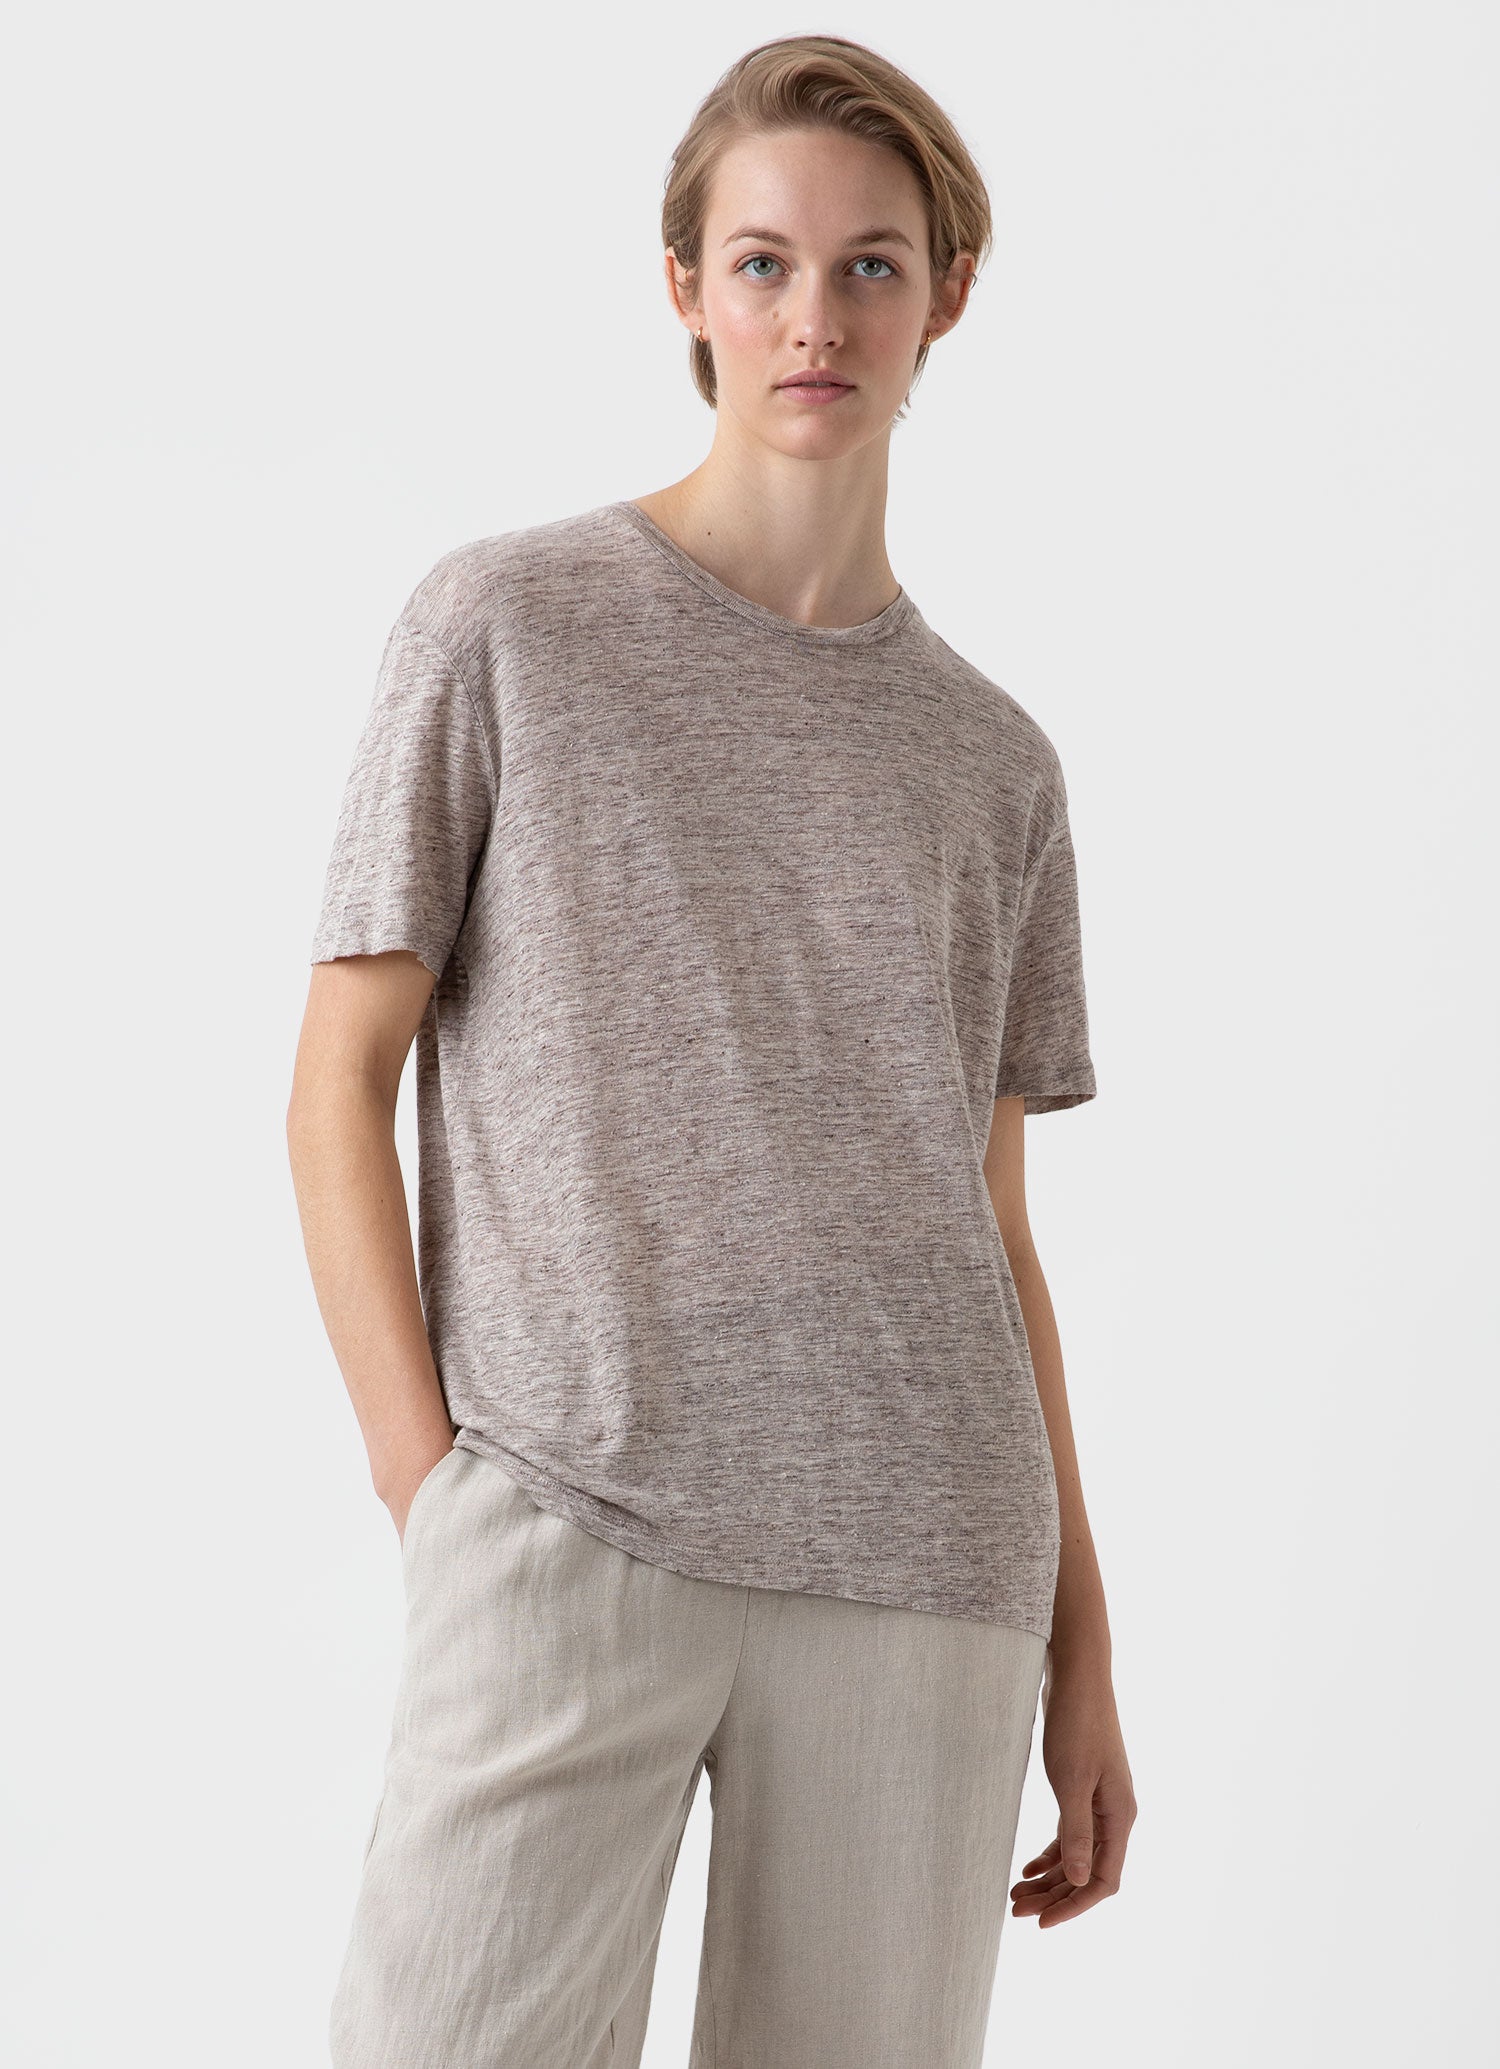 Women's Linen T-shirt in Oatmeal Melange